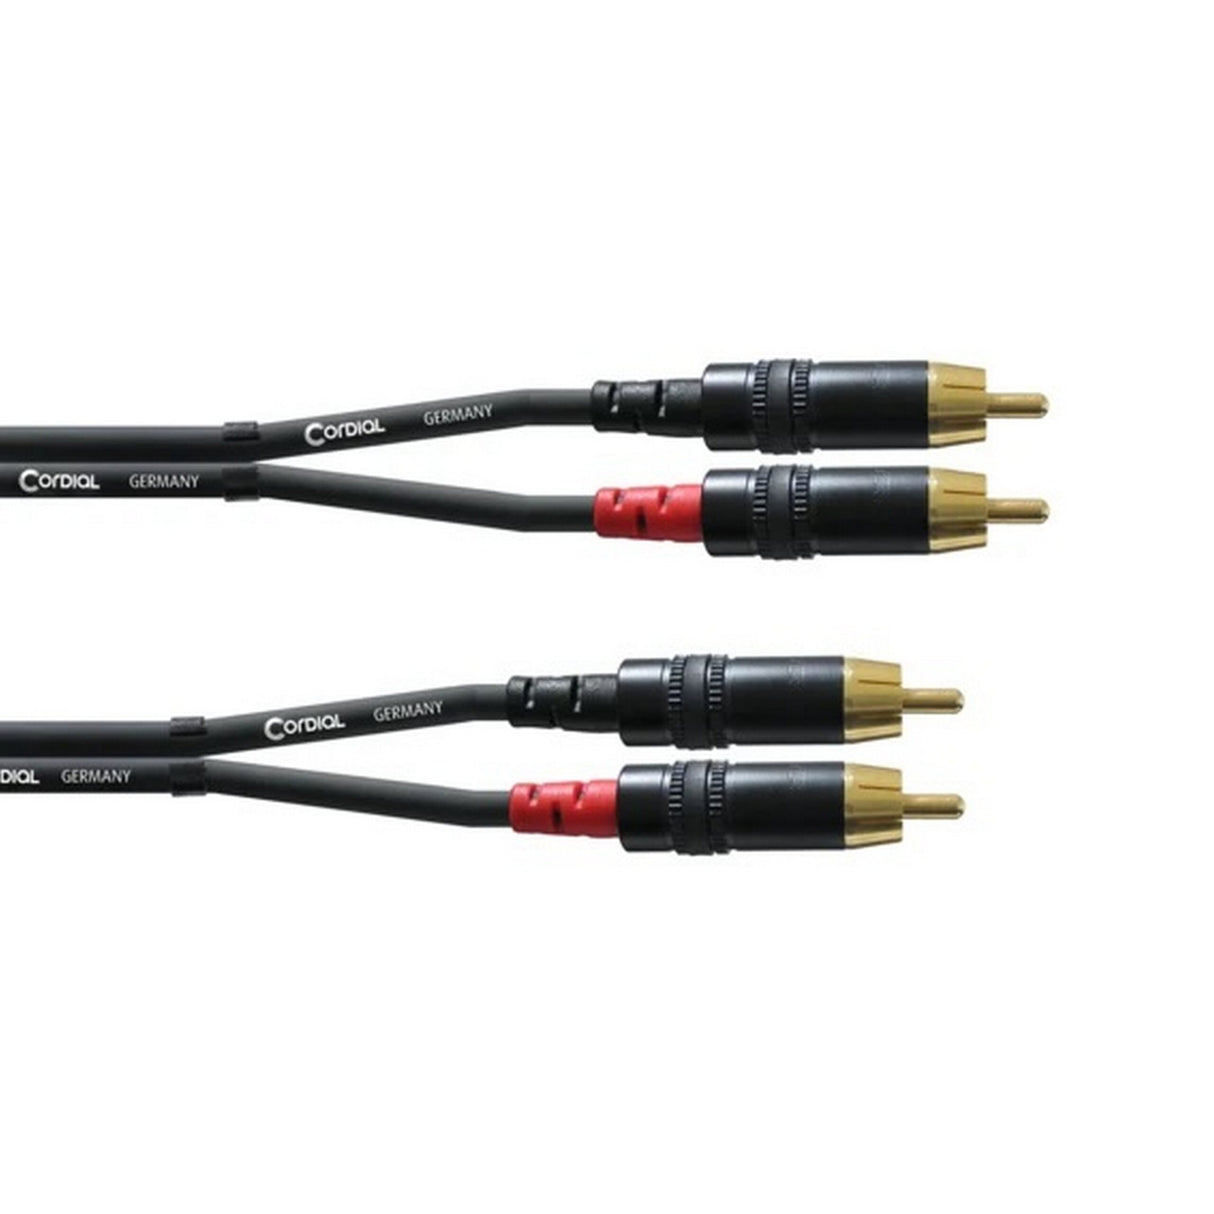 Cordial CFU 1.5 CC 2 x RCA to 2 x RCA Twin Cable/Adapter, Black, 5-Feet